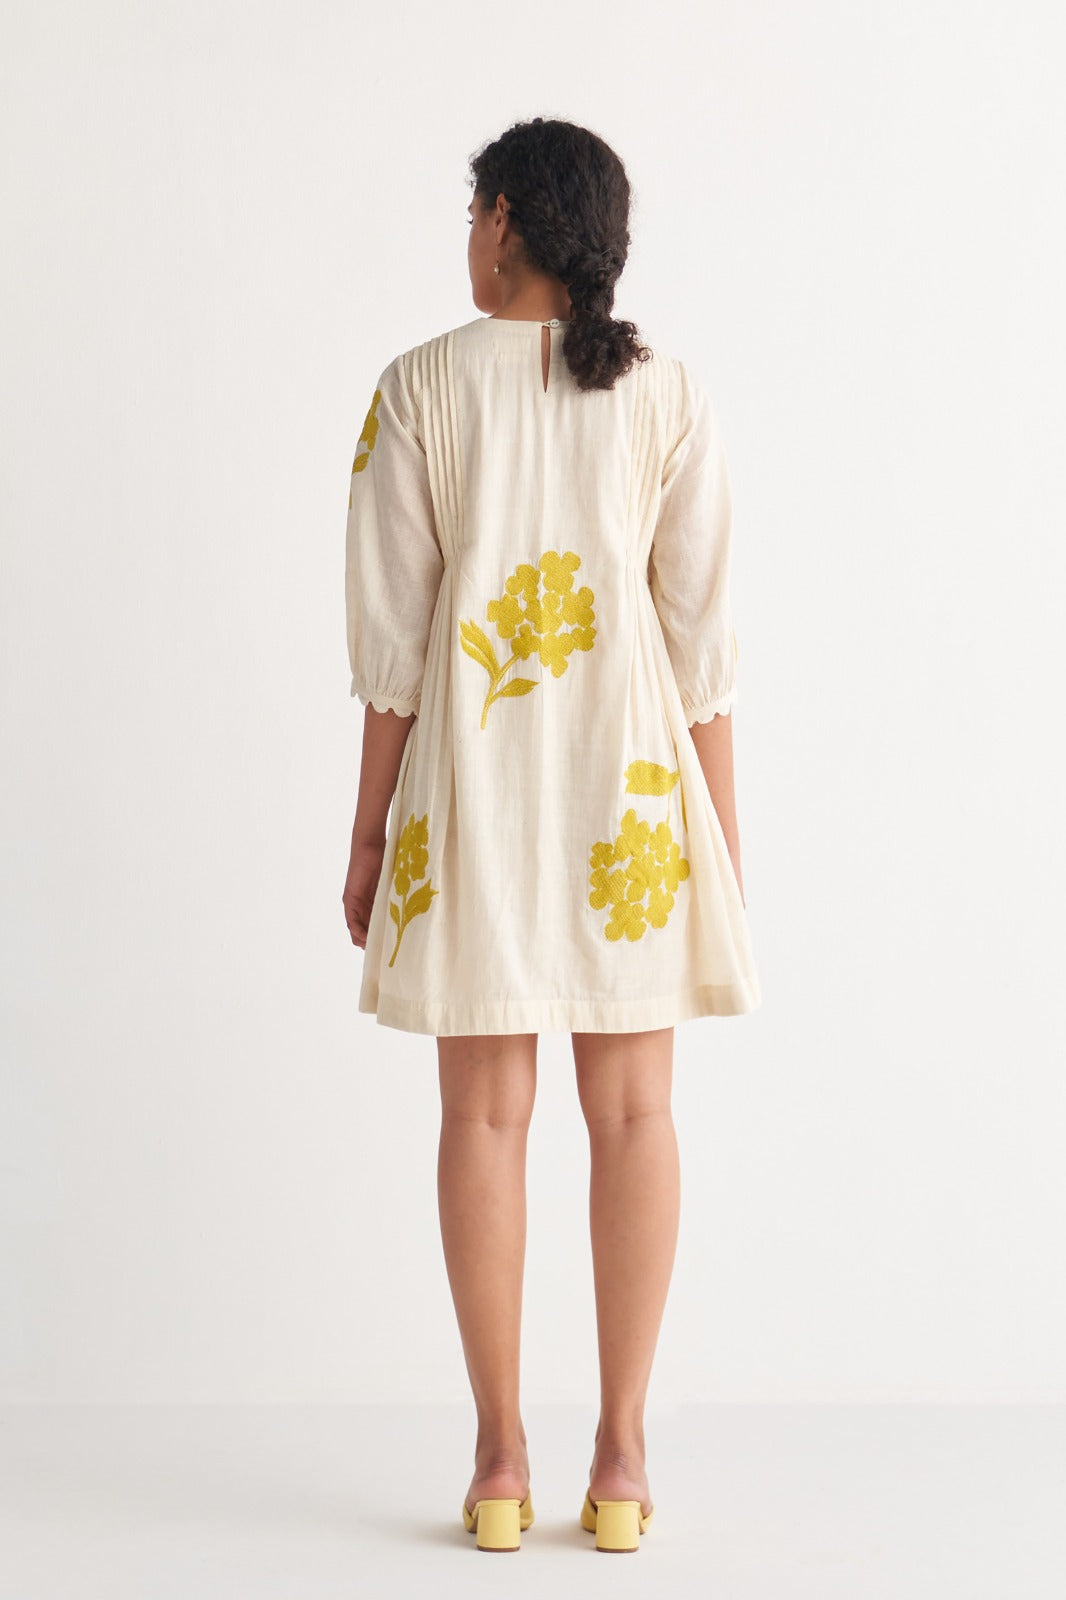 Canary Yellow Pintuck Cross-stitch bunch Off-White dress